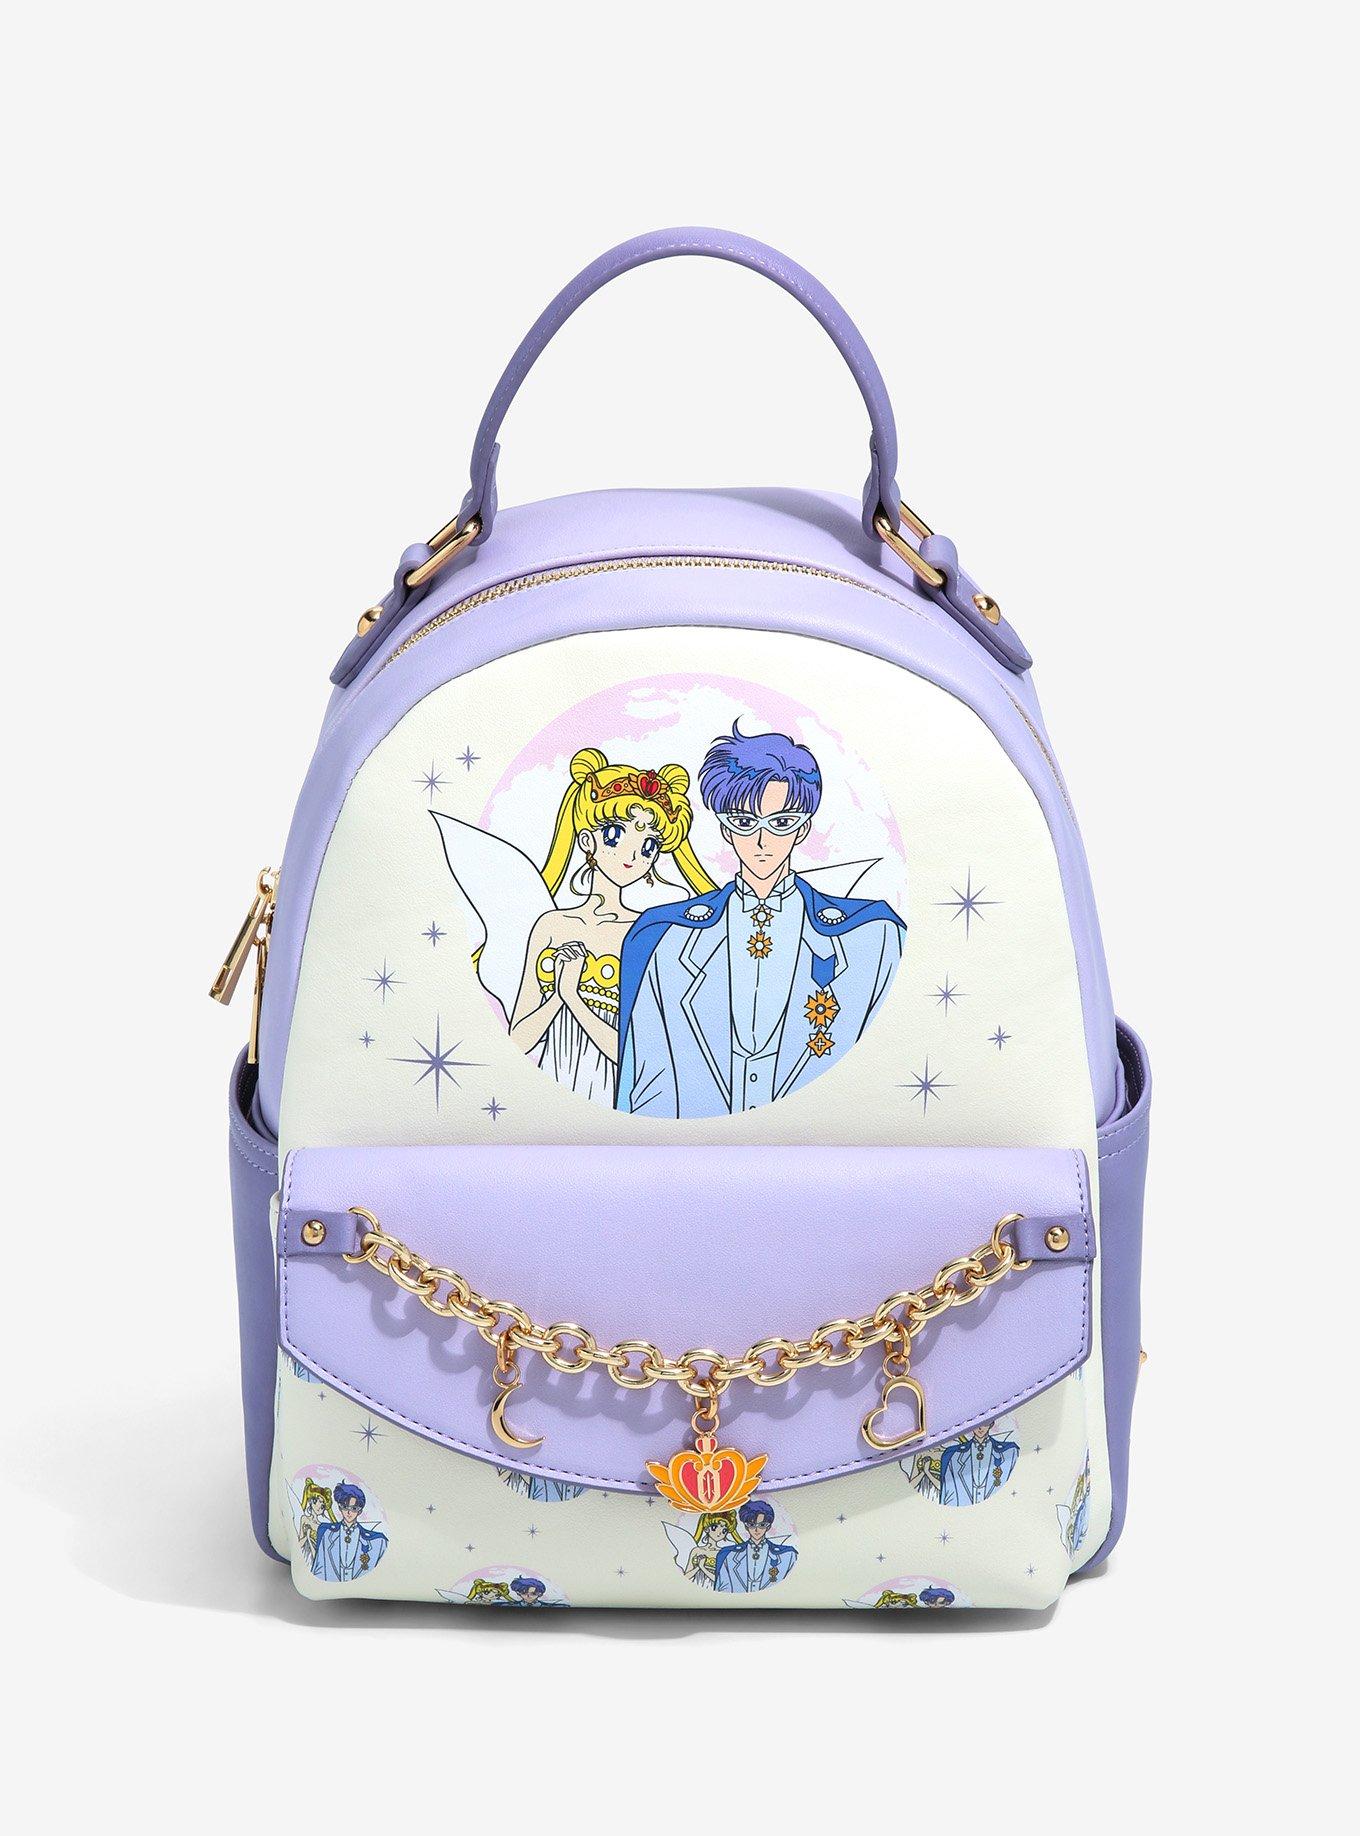 Sailor Moon World Bento Box Lunch Bag – With Sailor Saturn